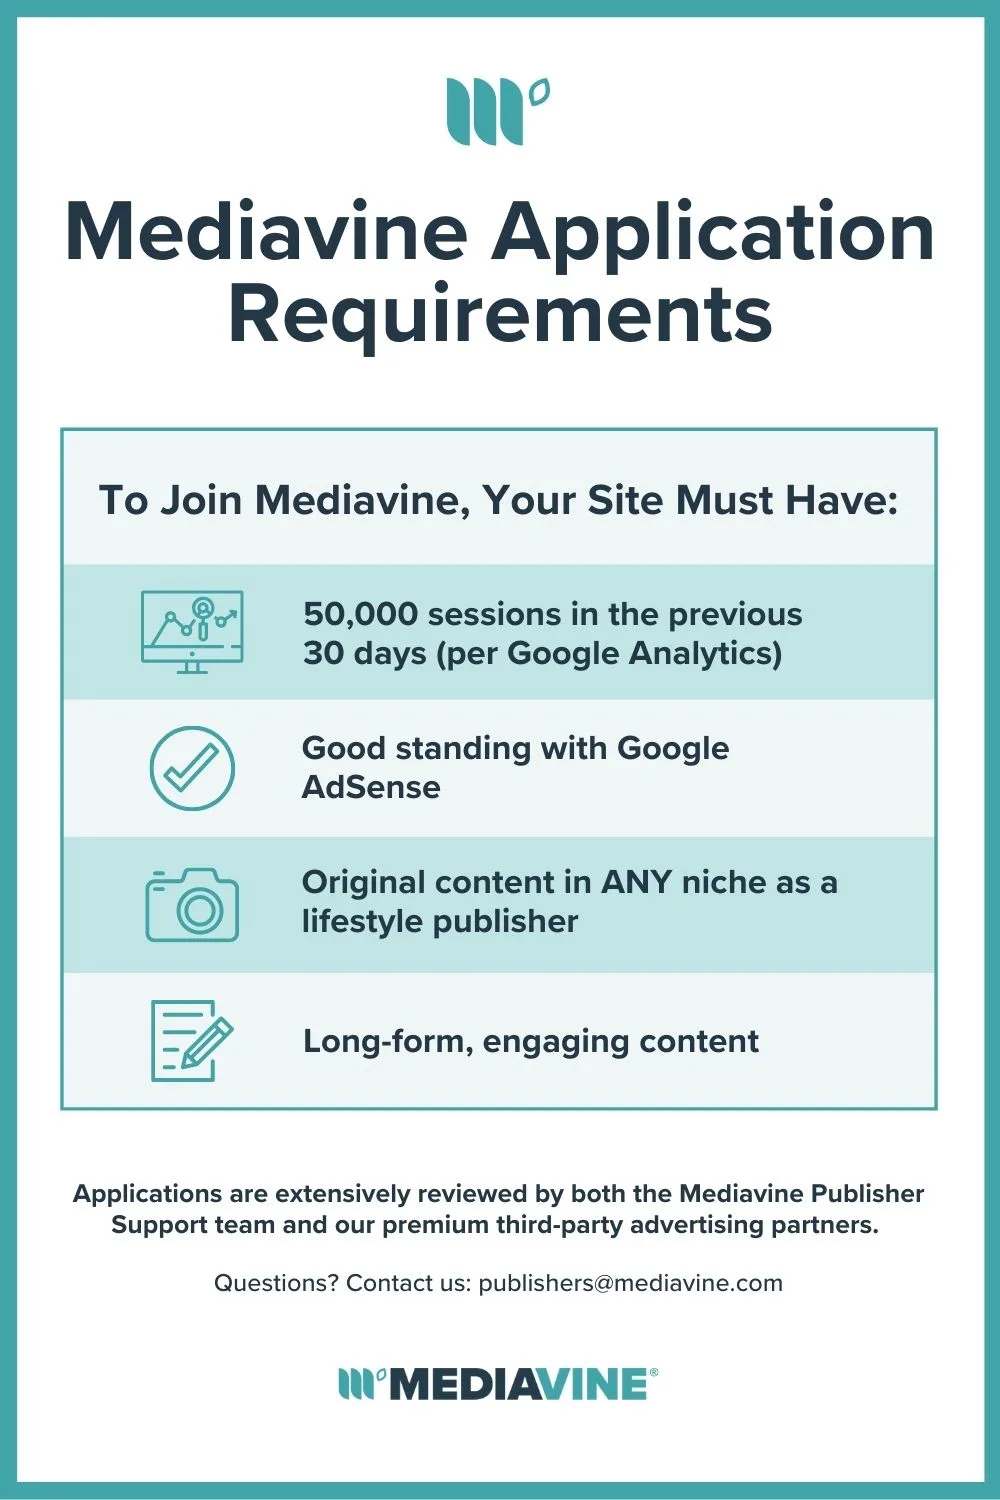 infographic explaining mediavine's application requirements